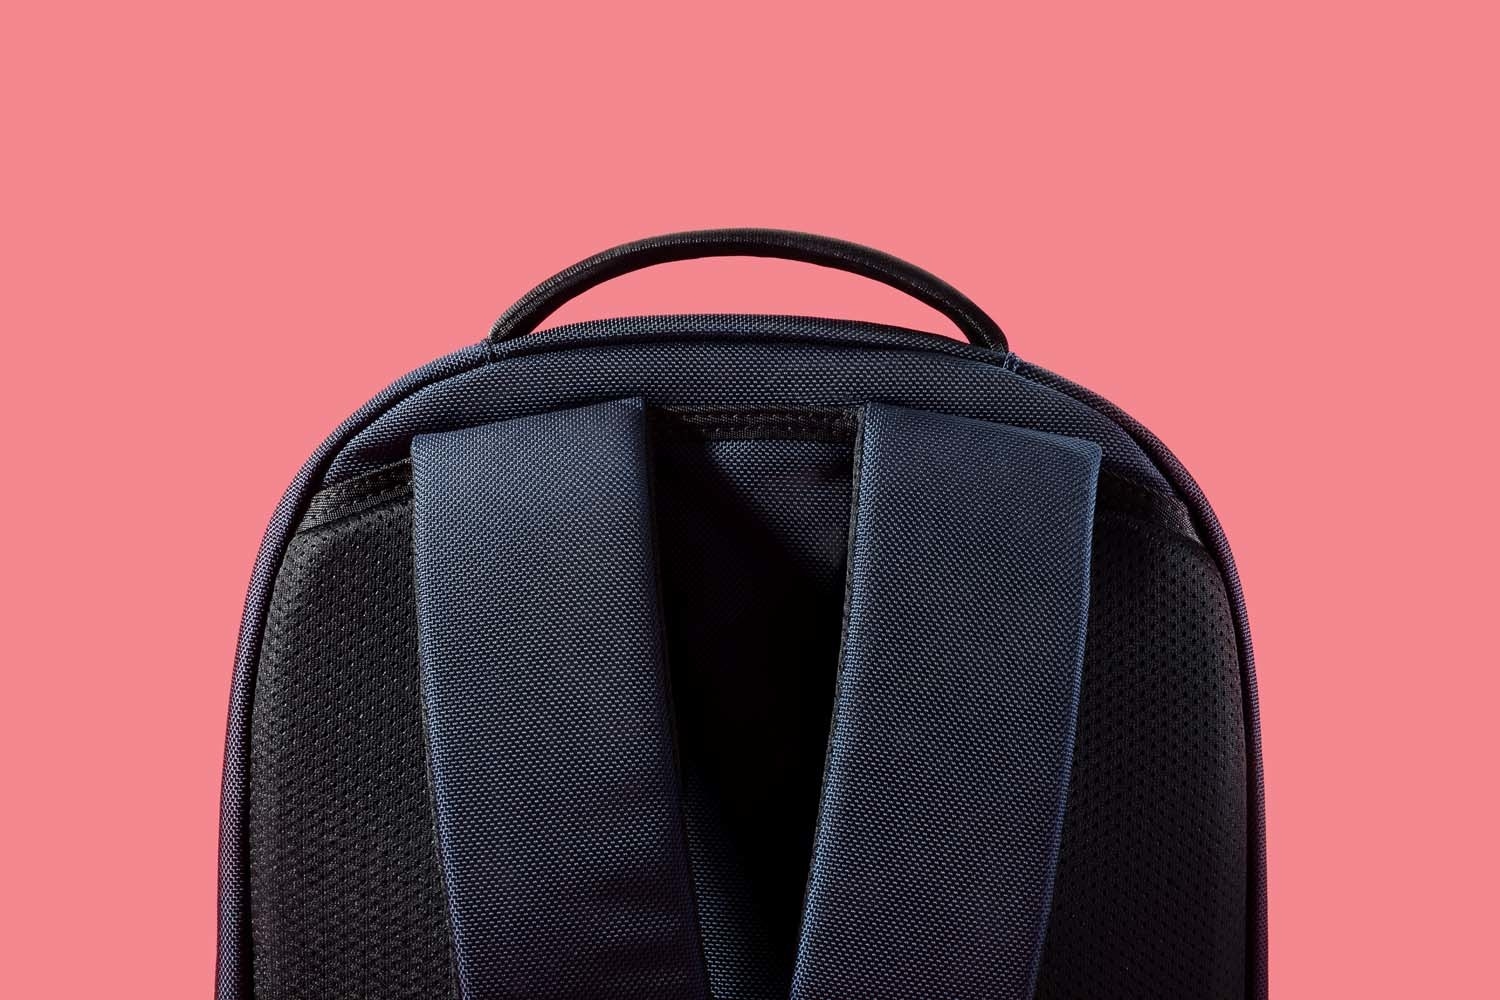 LFDD TIK Tok Work Backpack,Large Lightweight,Laptop Backpack,for Work College,13